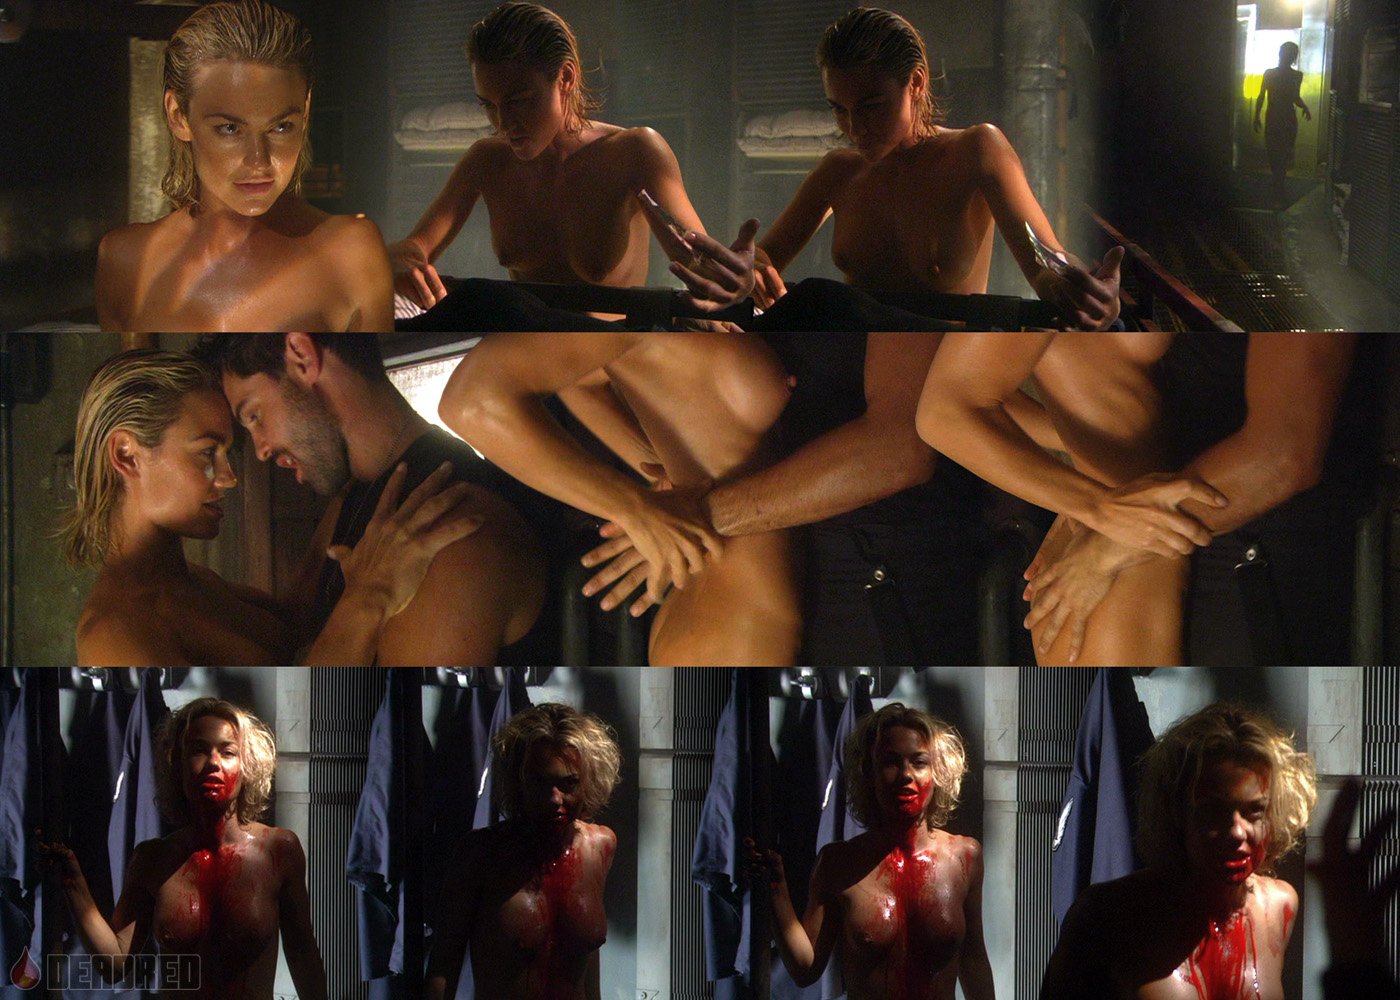 dave eisenhauer share nude pics of kelly carlson photos